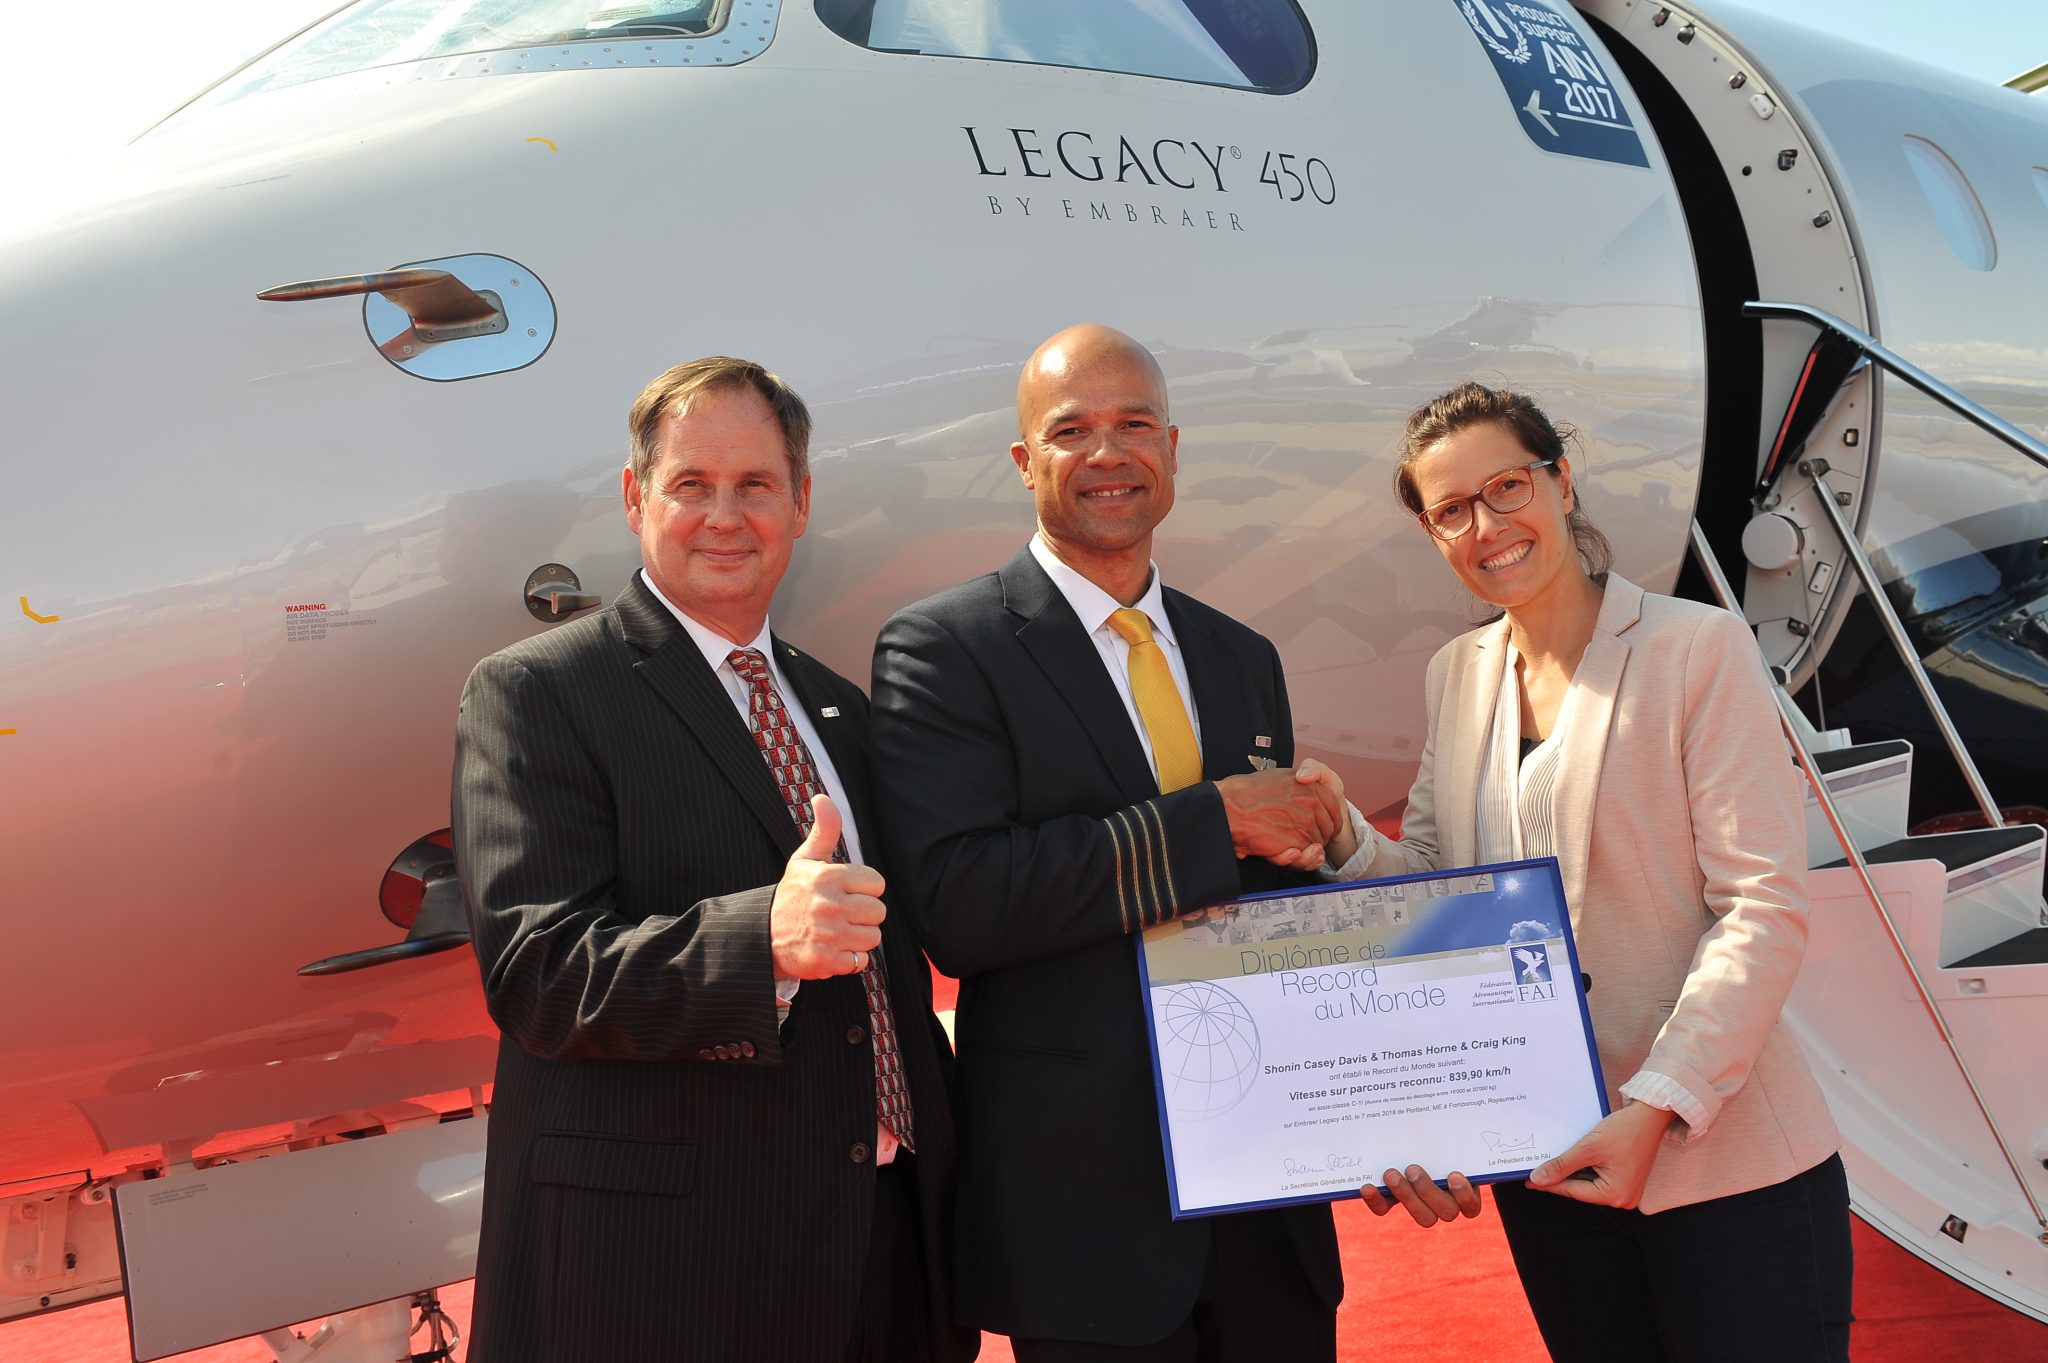 Embraer Legacy 450 sets transatlantic speed record